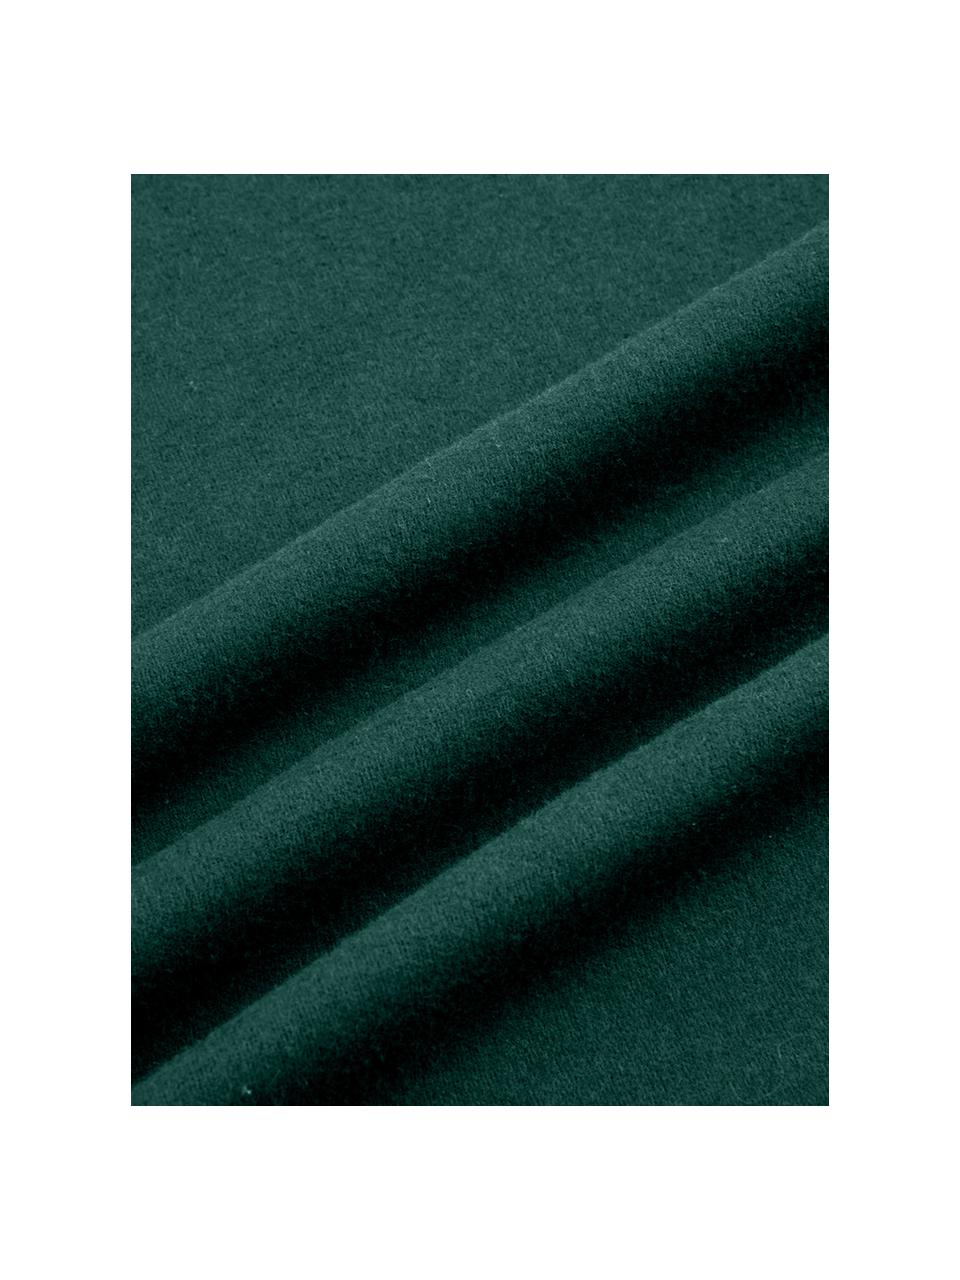 Flanell-Bettwäsche Biba in Waldgrün, Webart: Flanell Flanell ist ein k, Waldgrün, 135 x 200 cm + 1 Kissen 80 x 80 cm